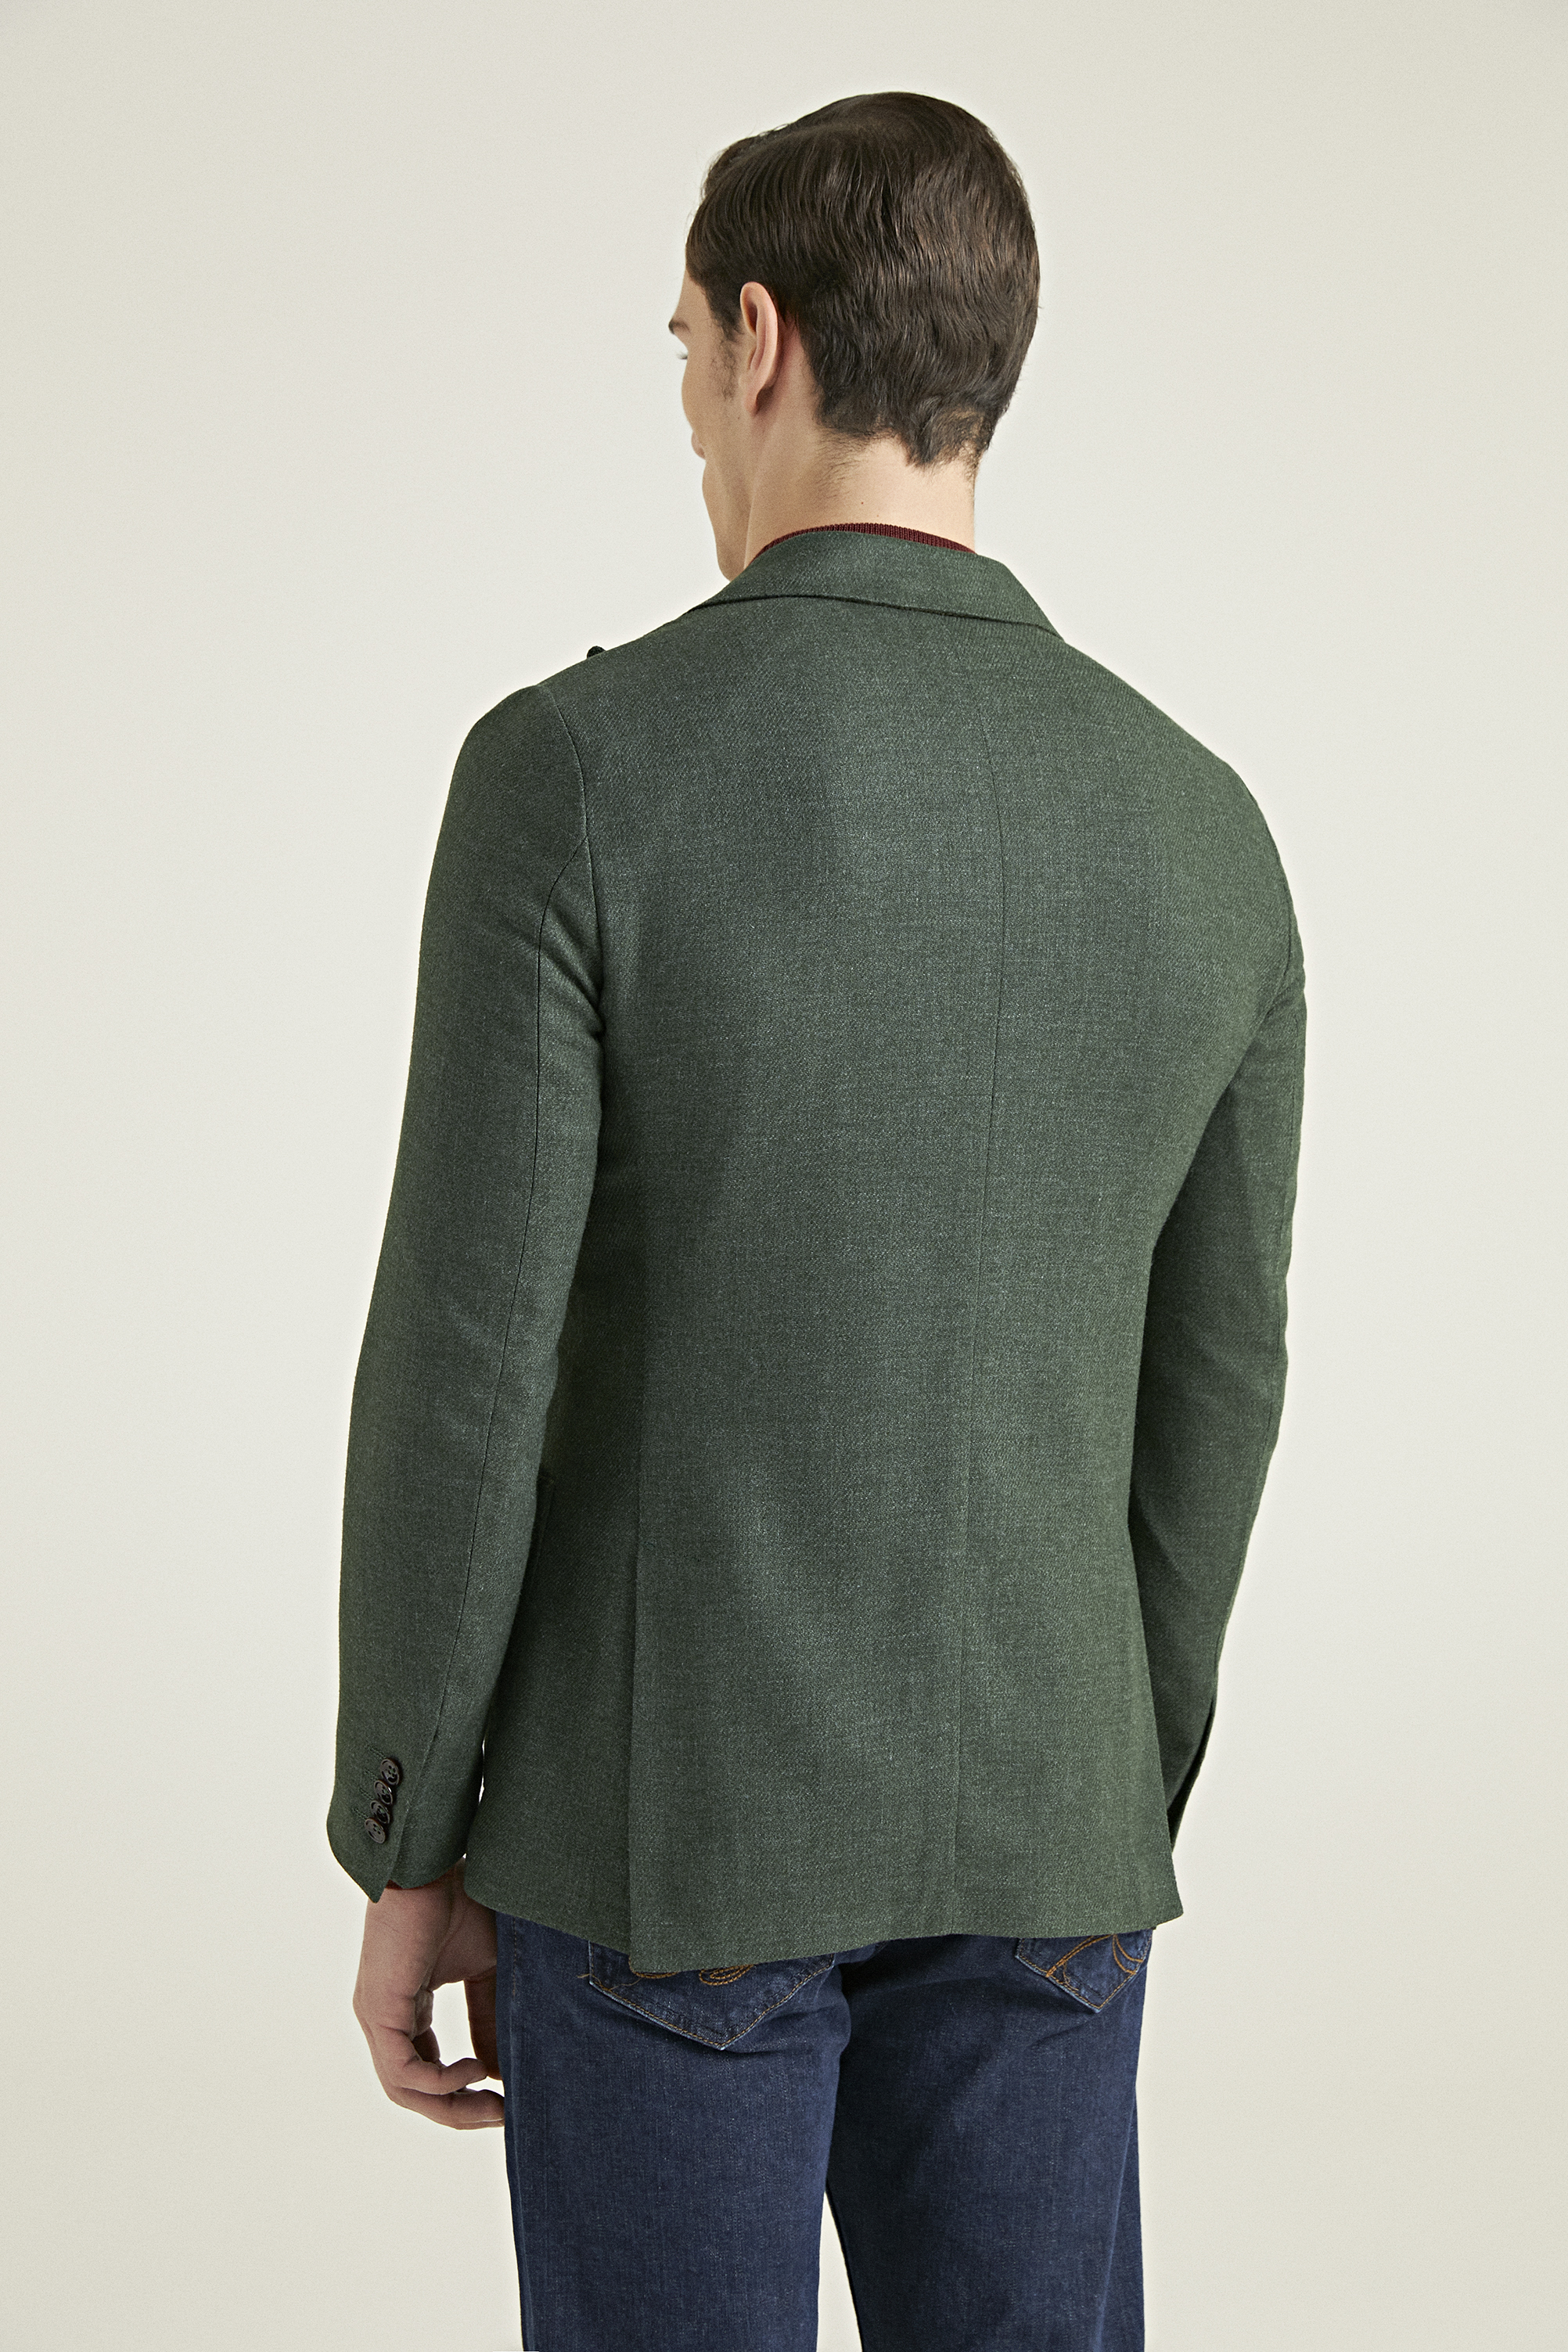 Damat Tween Tween Slim Fit Yeşil Kumaş Ceket. 4